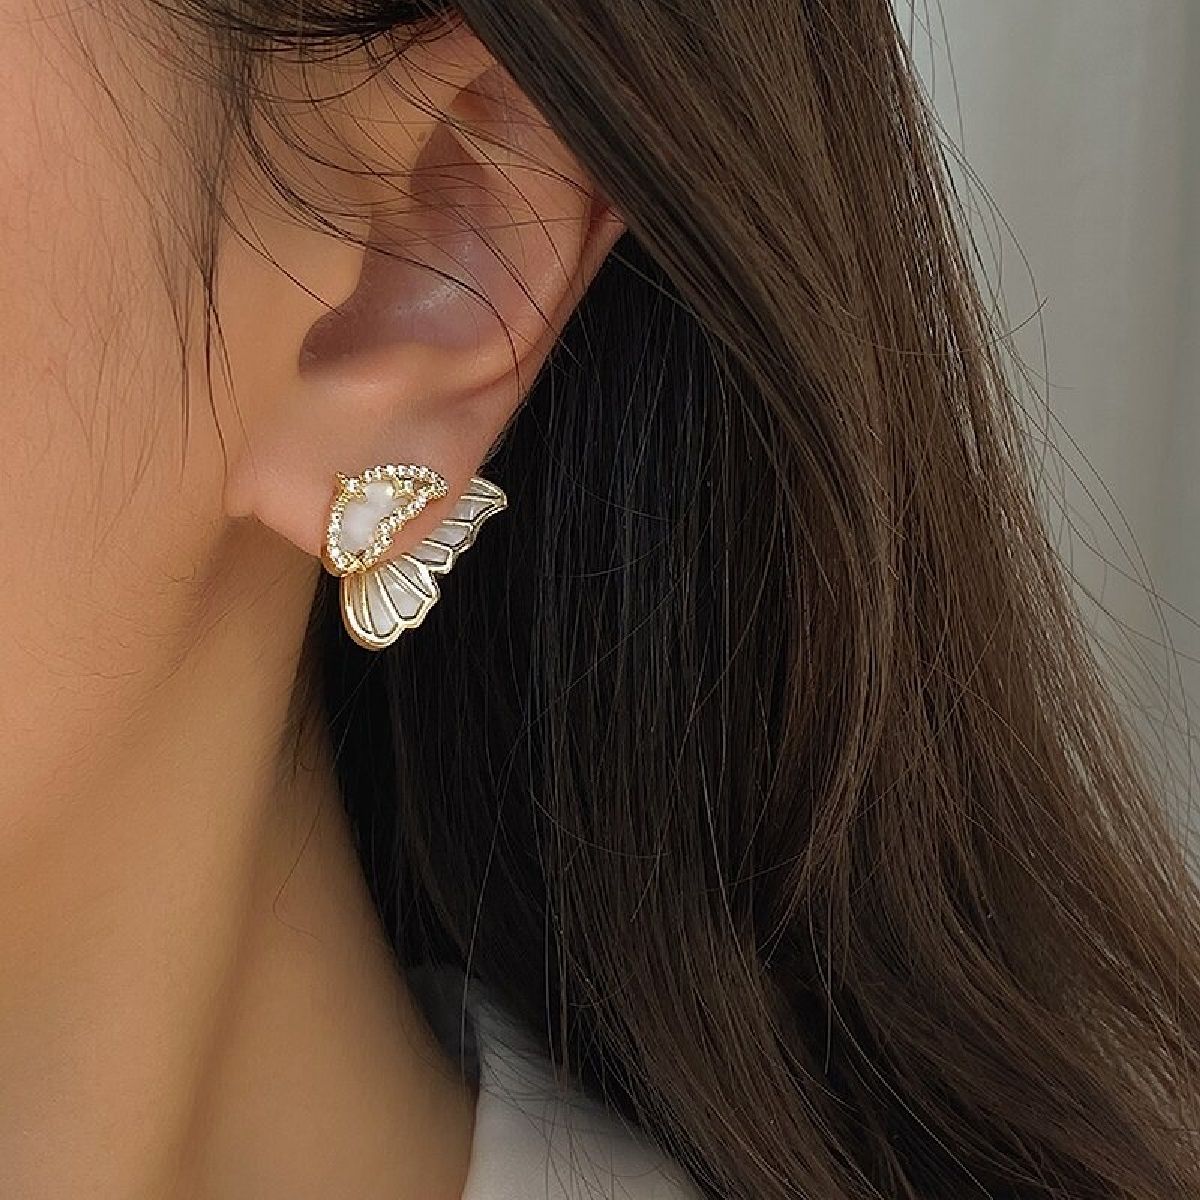 Flipkartcom  Buy TheVineGirl Korean Golden Studded Chain Tassels Ear Cuff  Earrings For Women And Girls Metal Cuff Earring Online at Best Prices in  India